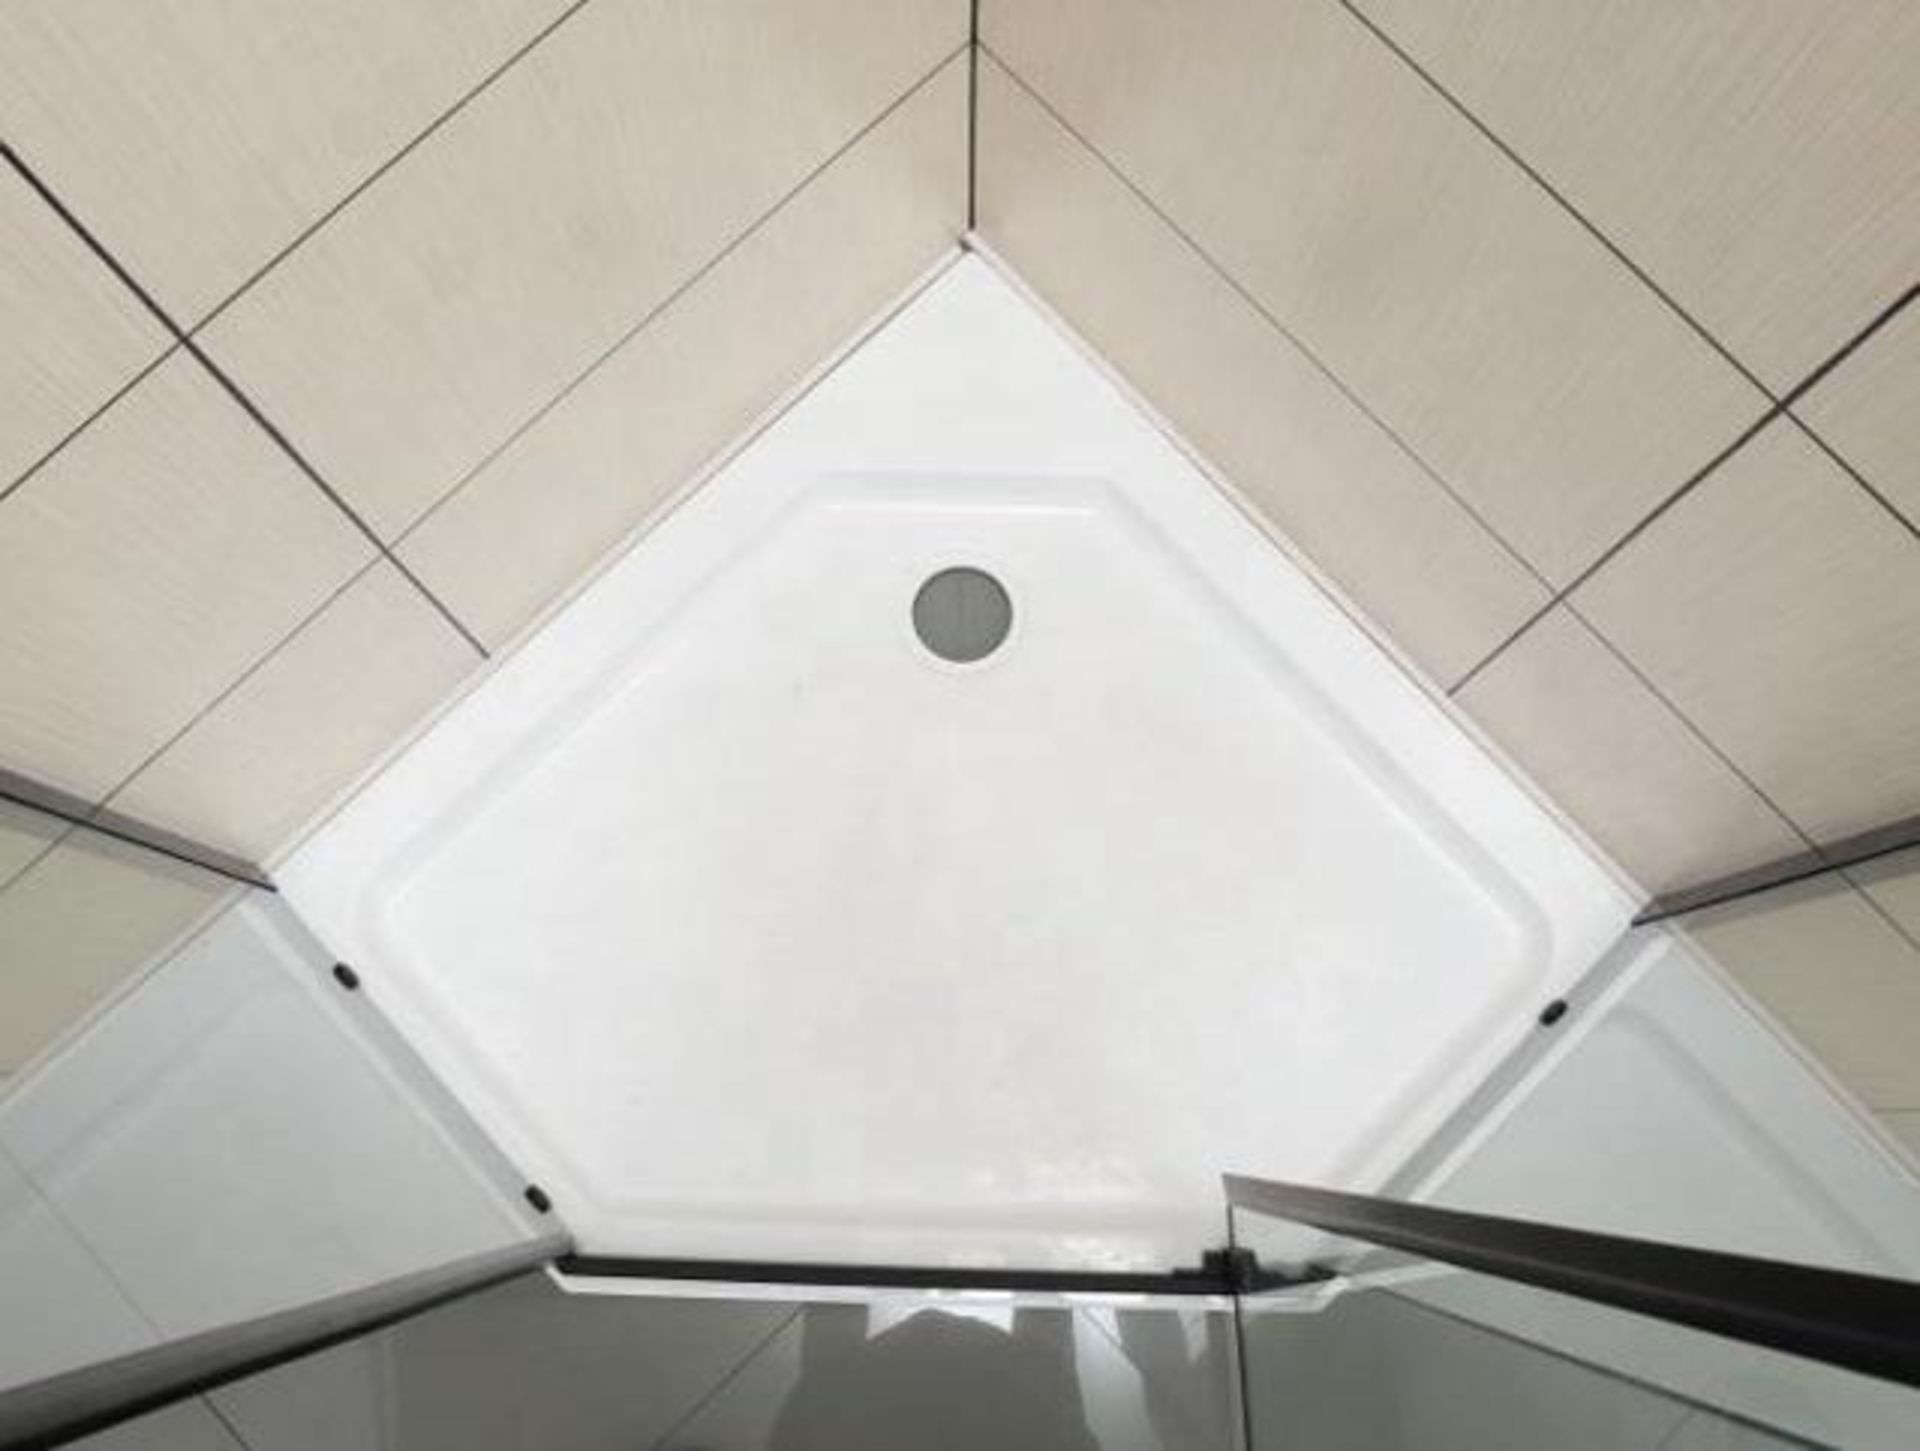 1 x Premium Quality Diamond-Shaped Shower Enclosure With Hinged Door - Frame Colour: Matt Black - Di - Image 3 of 4